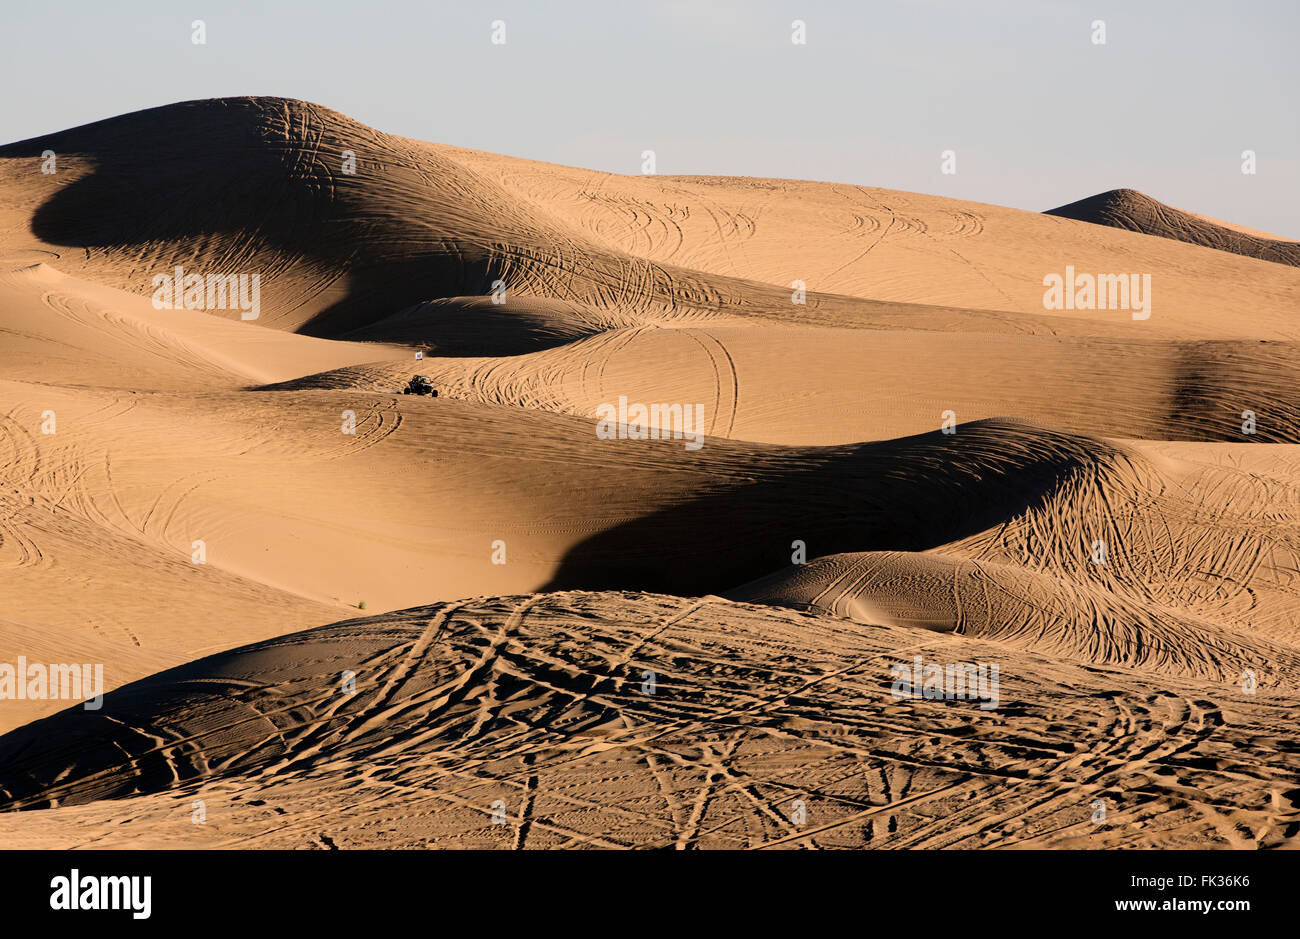 Imperial Sand Dunes Recreation Area, California USA Stock Photo